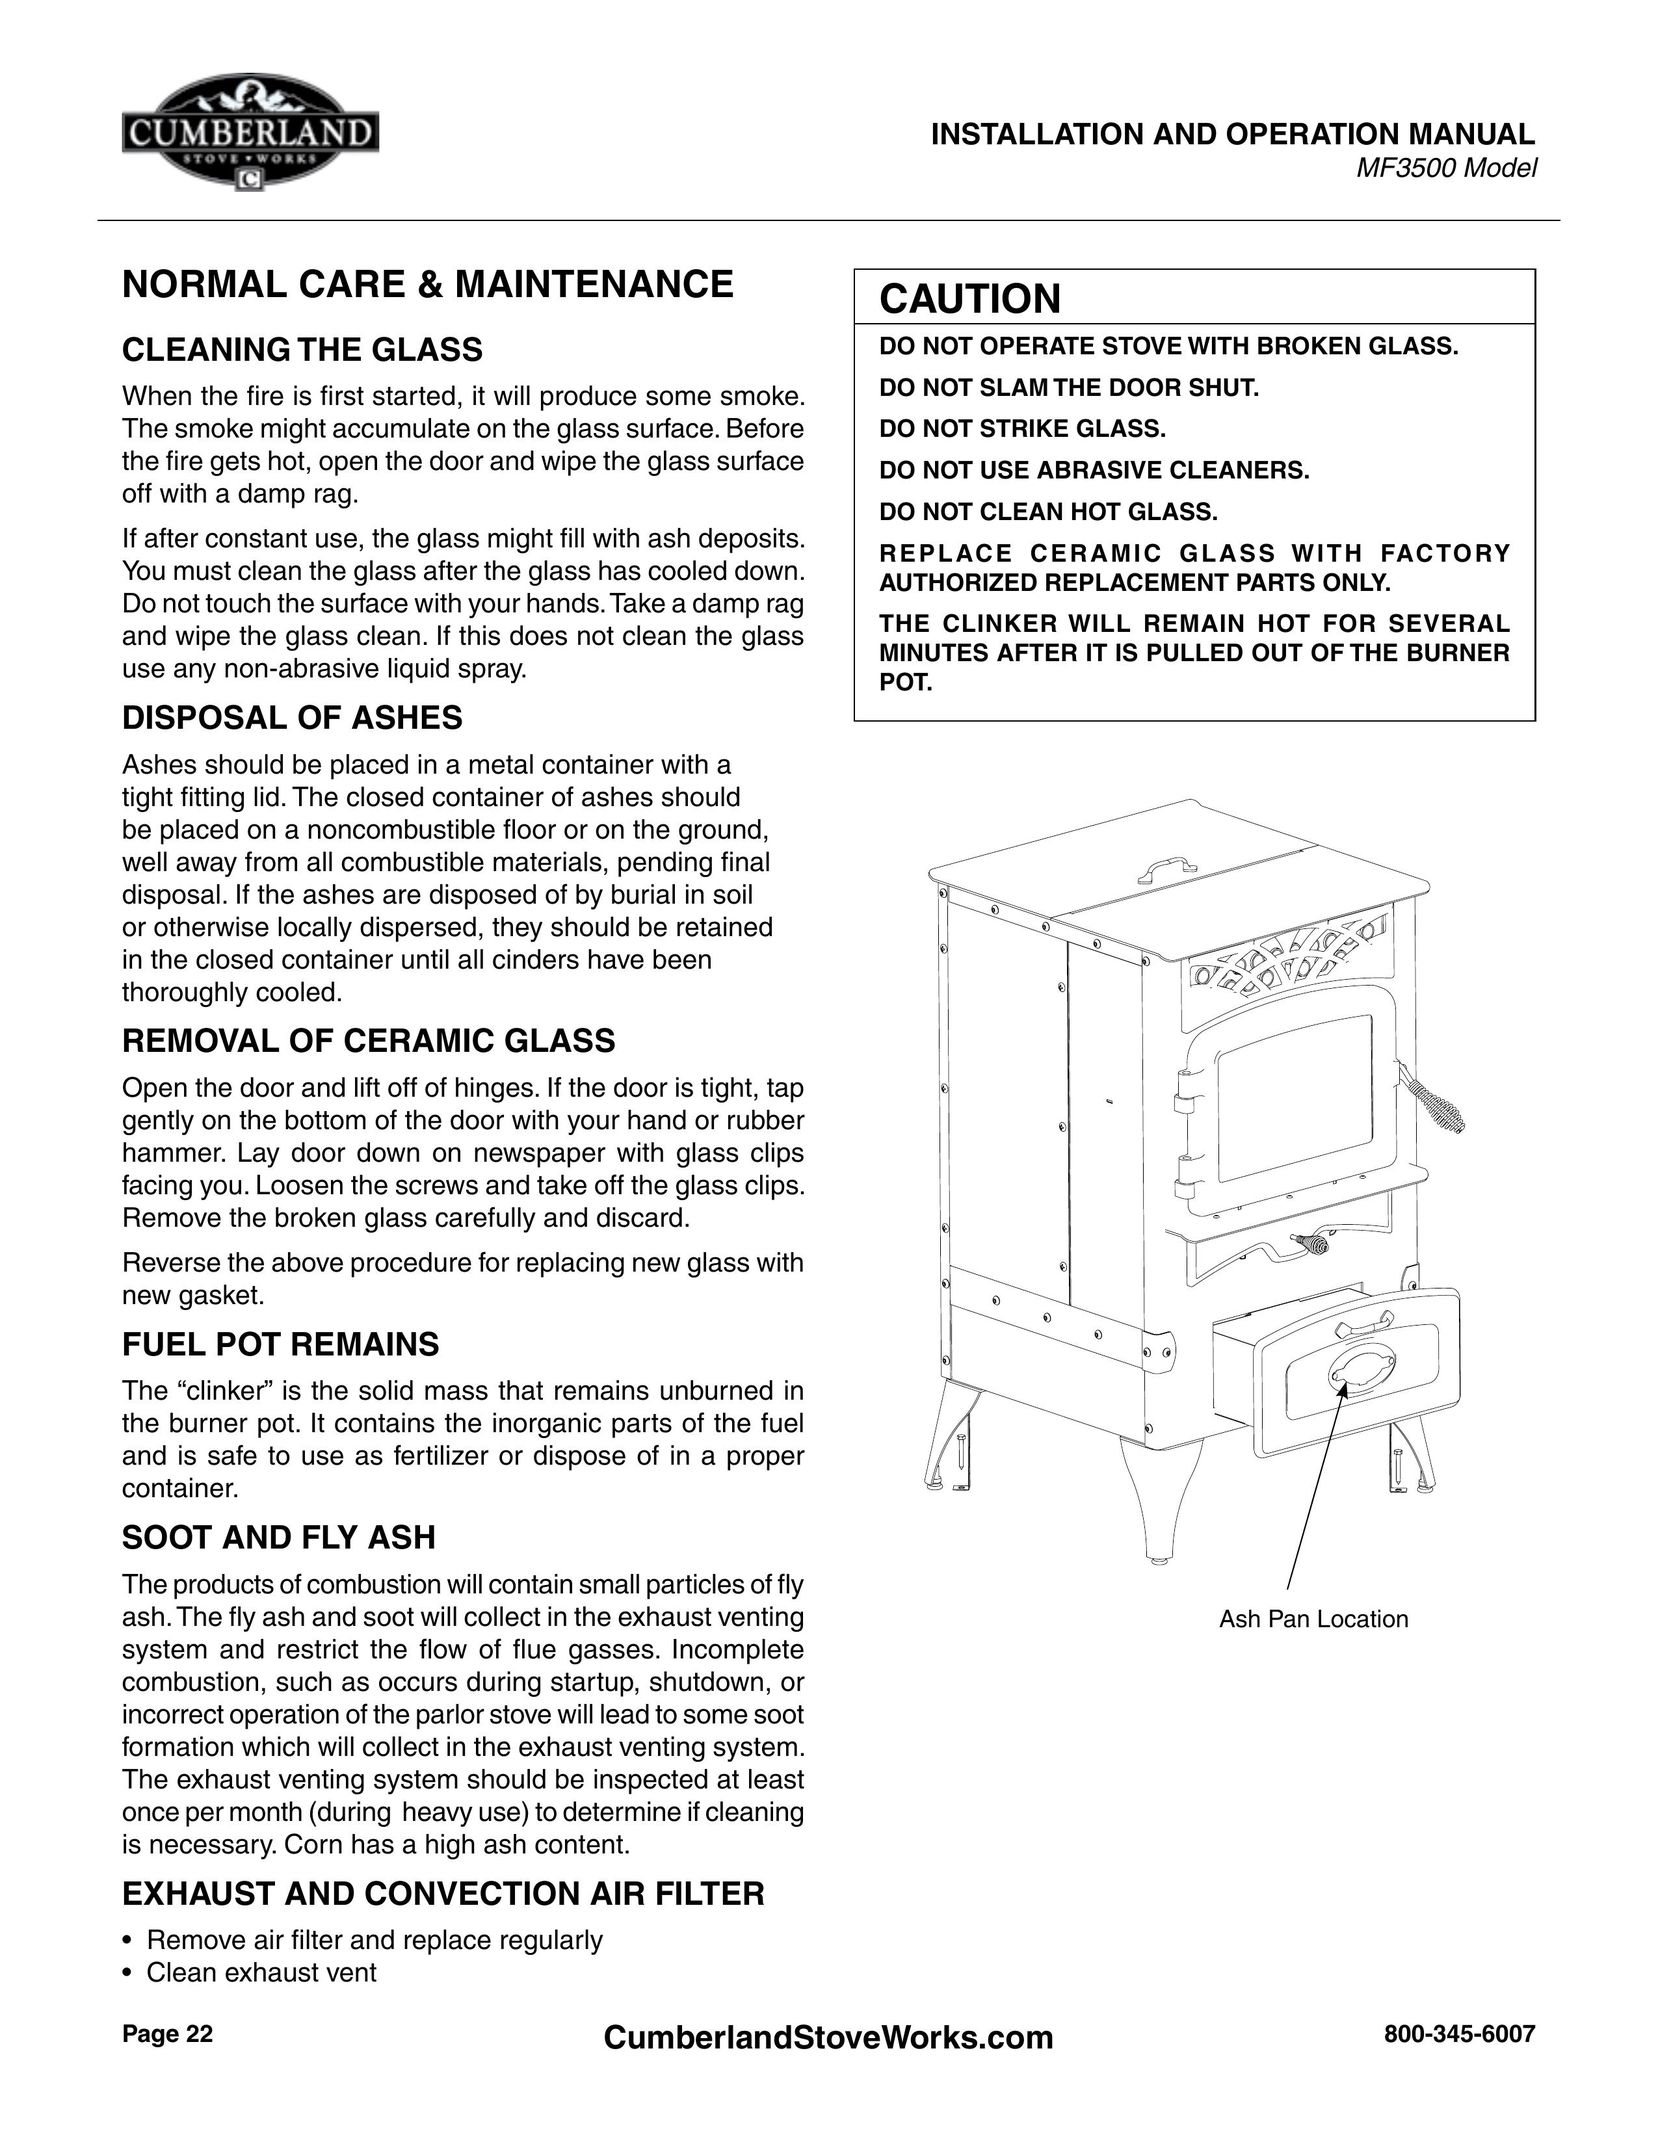 Cumberland Stove Works MF3500 Stove User Manual